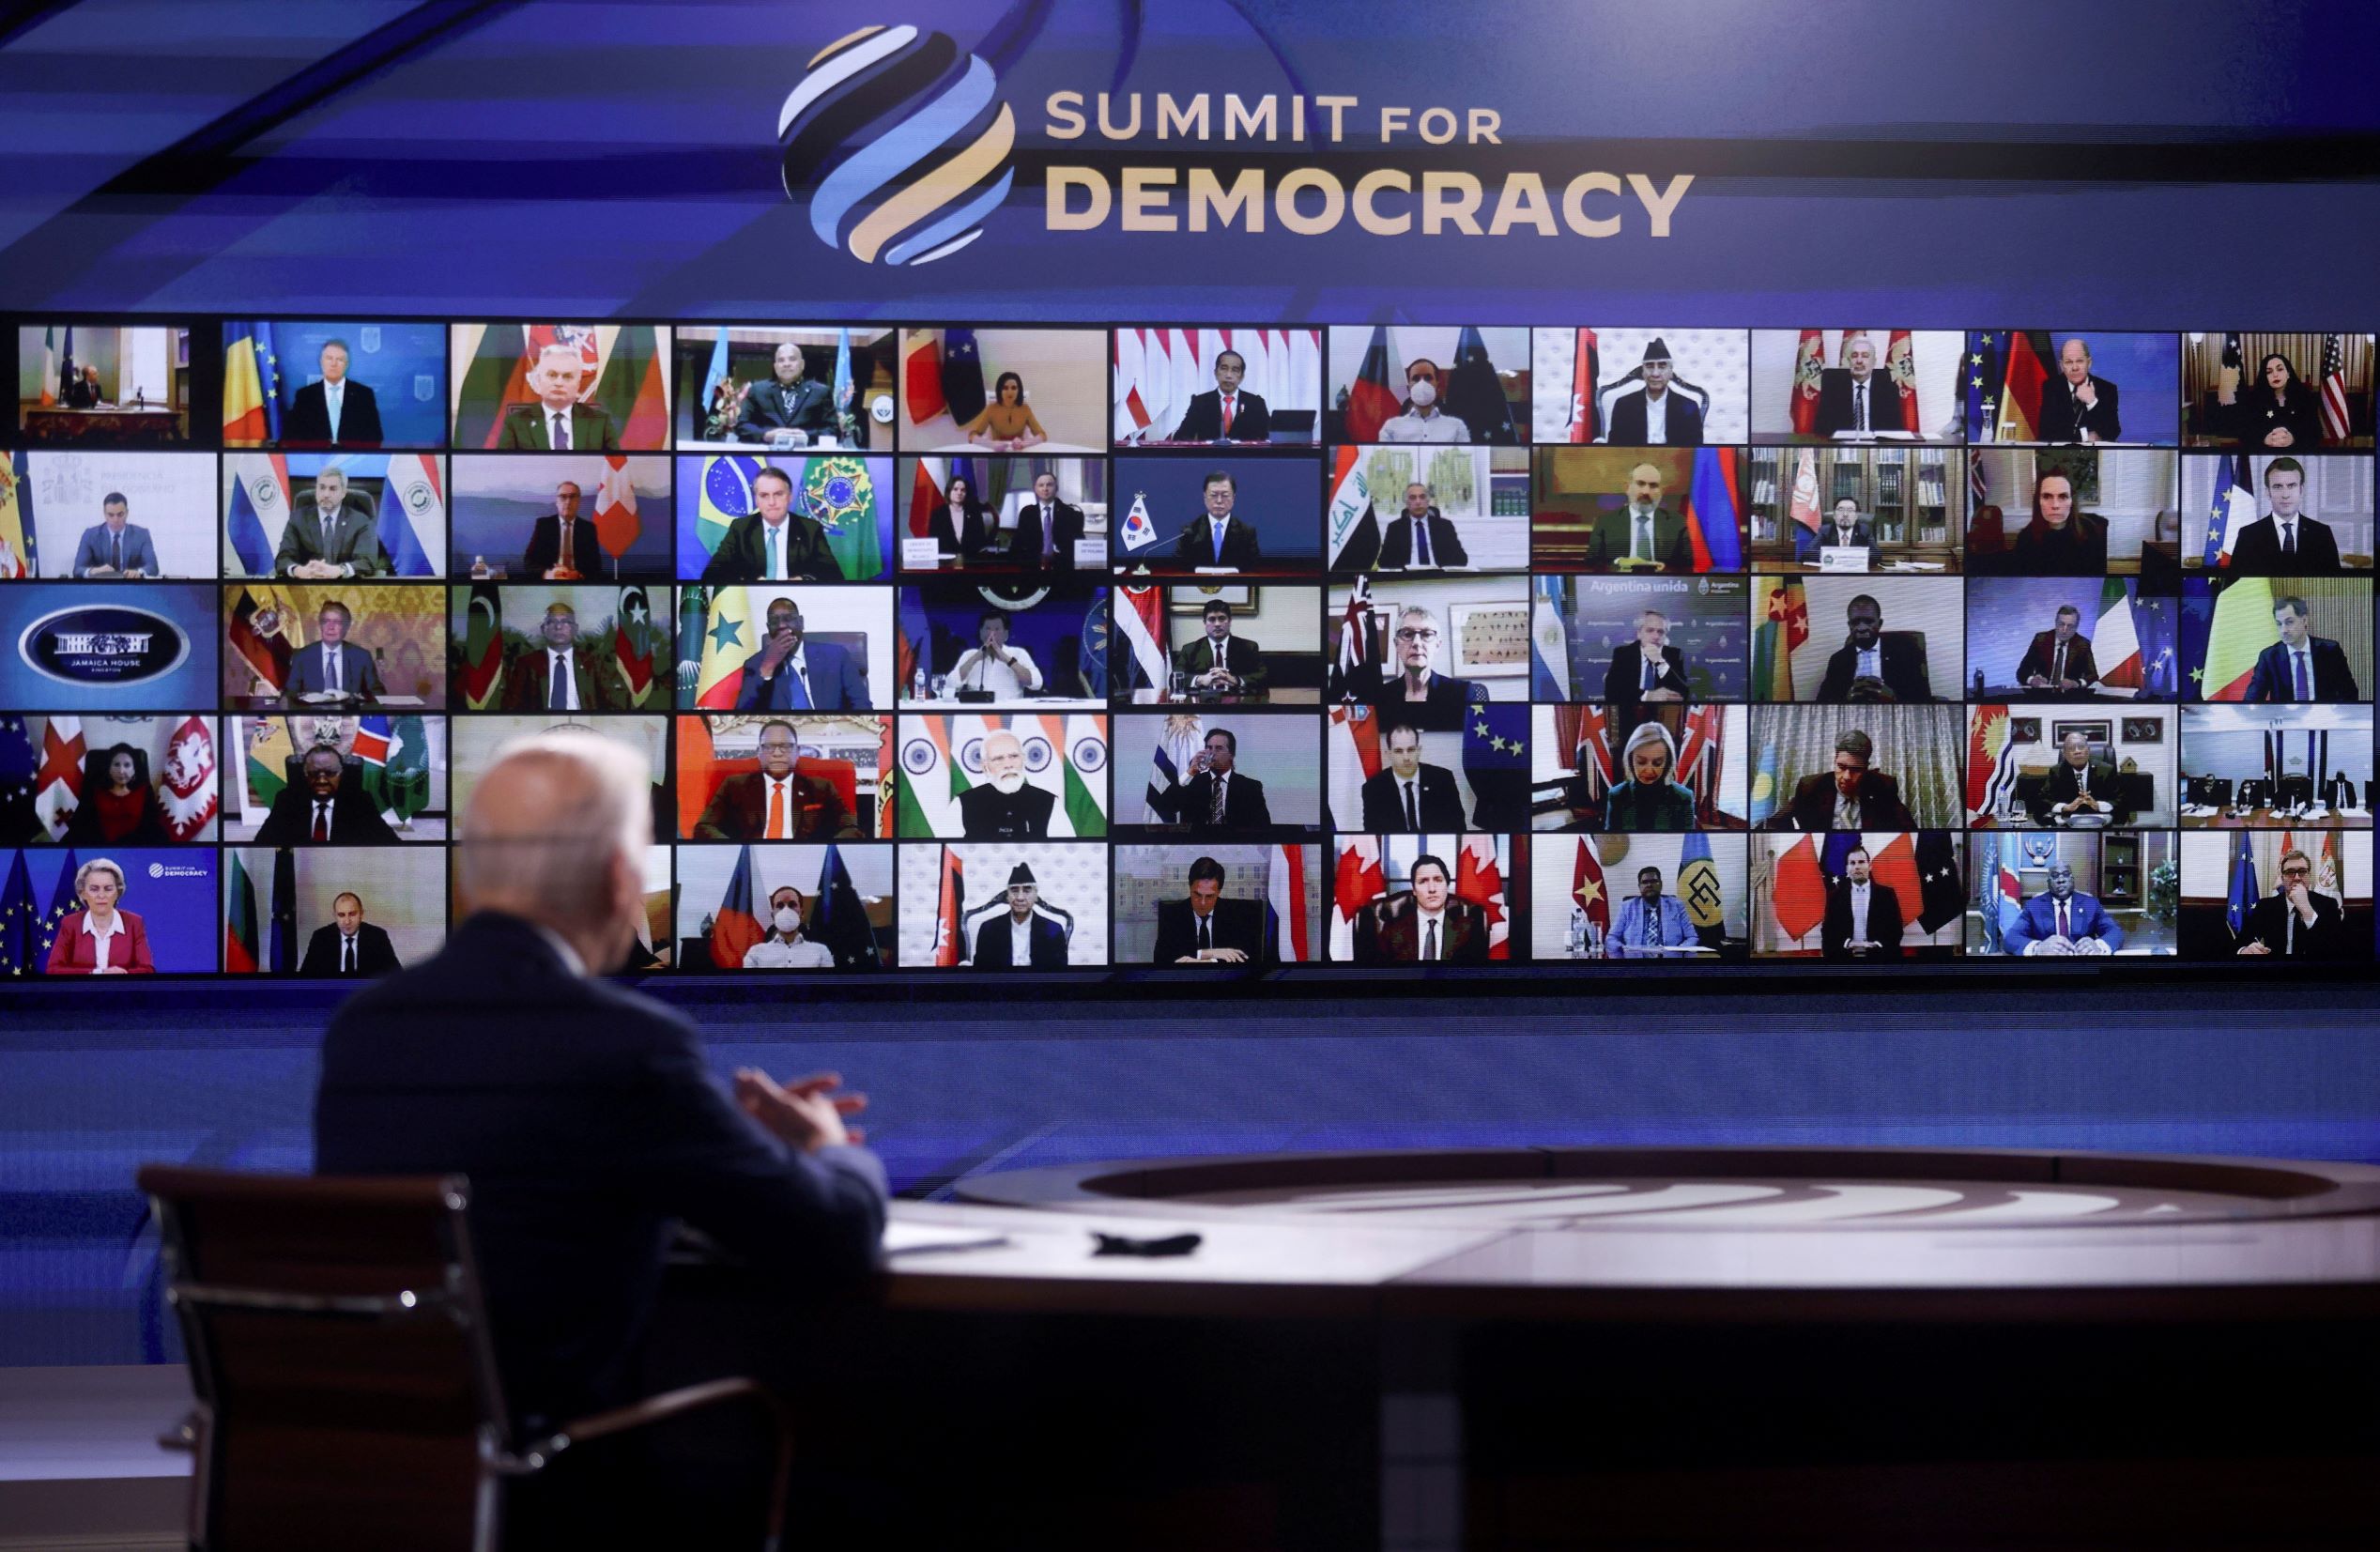 Global Perspectives on Biden’s Democracy Summit